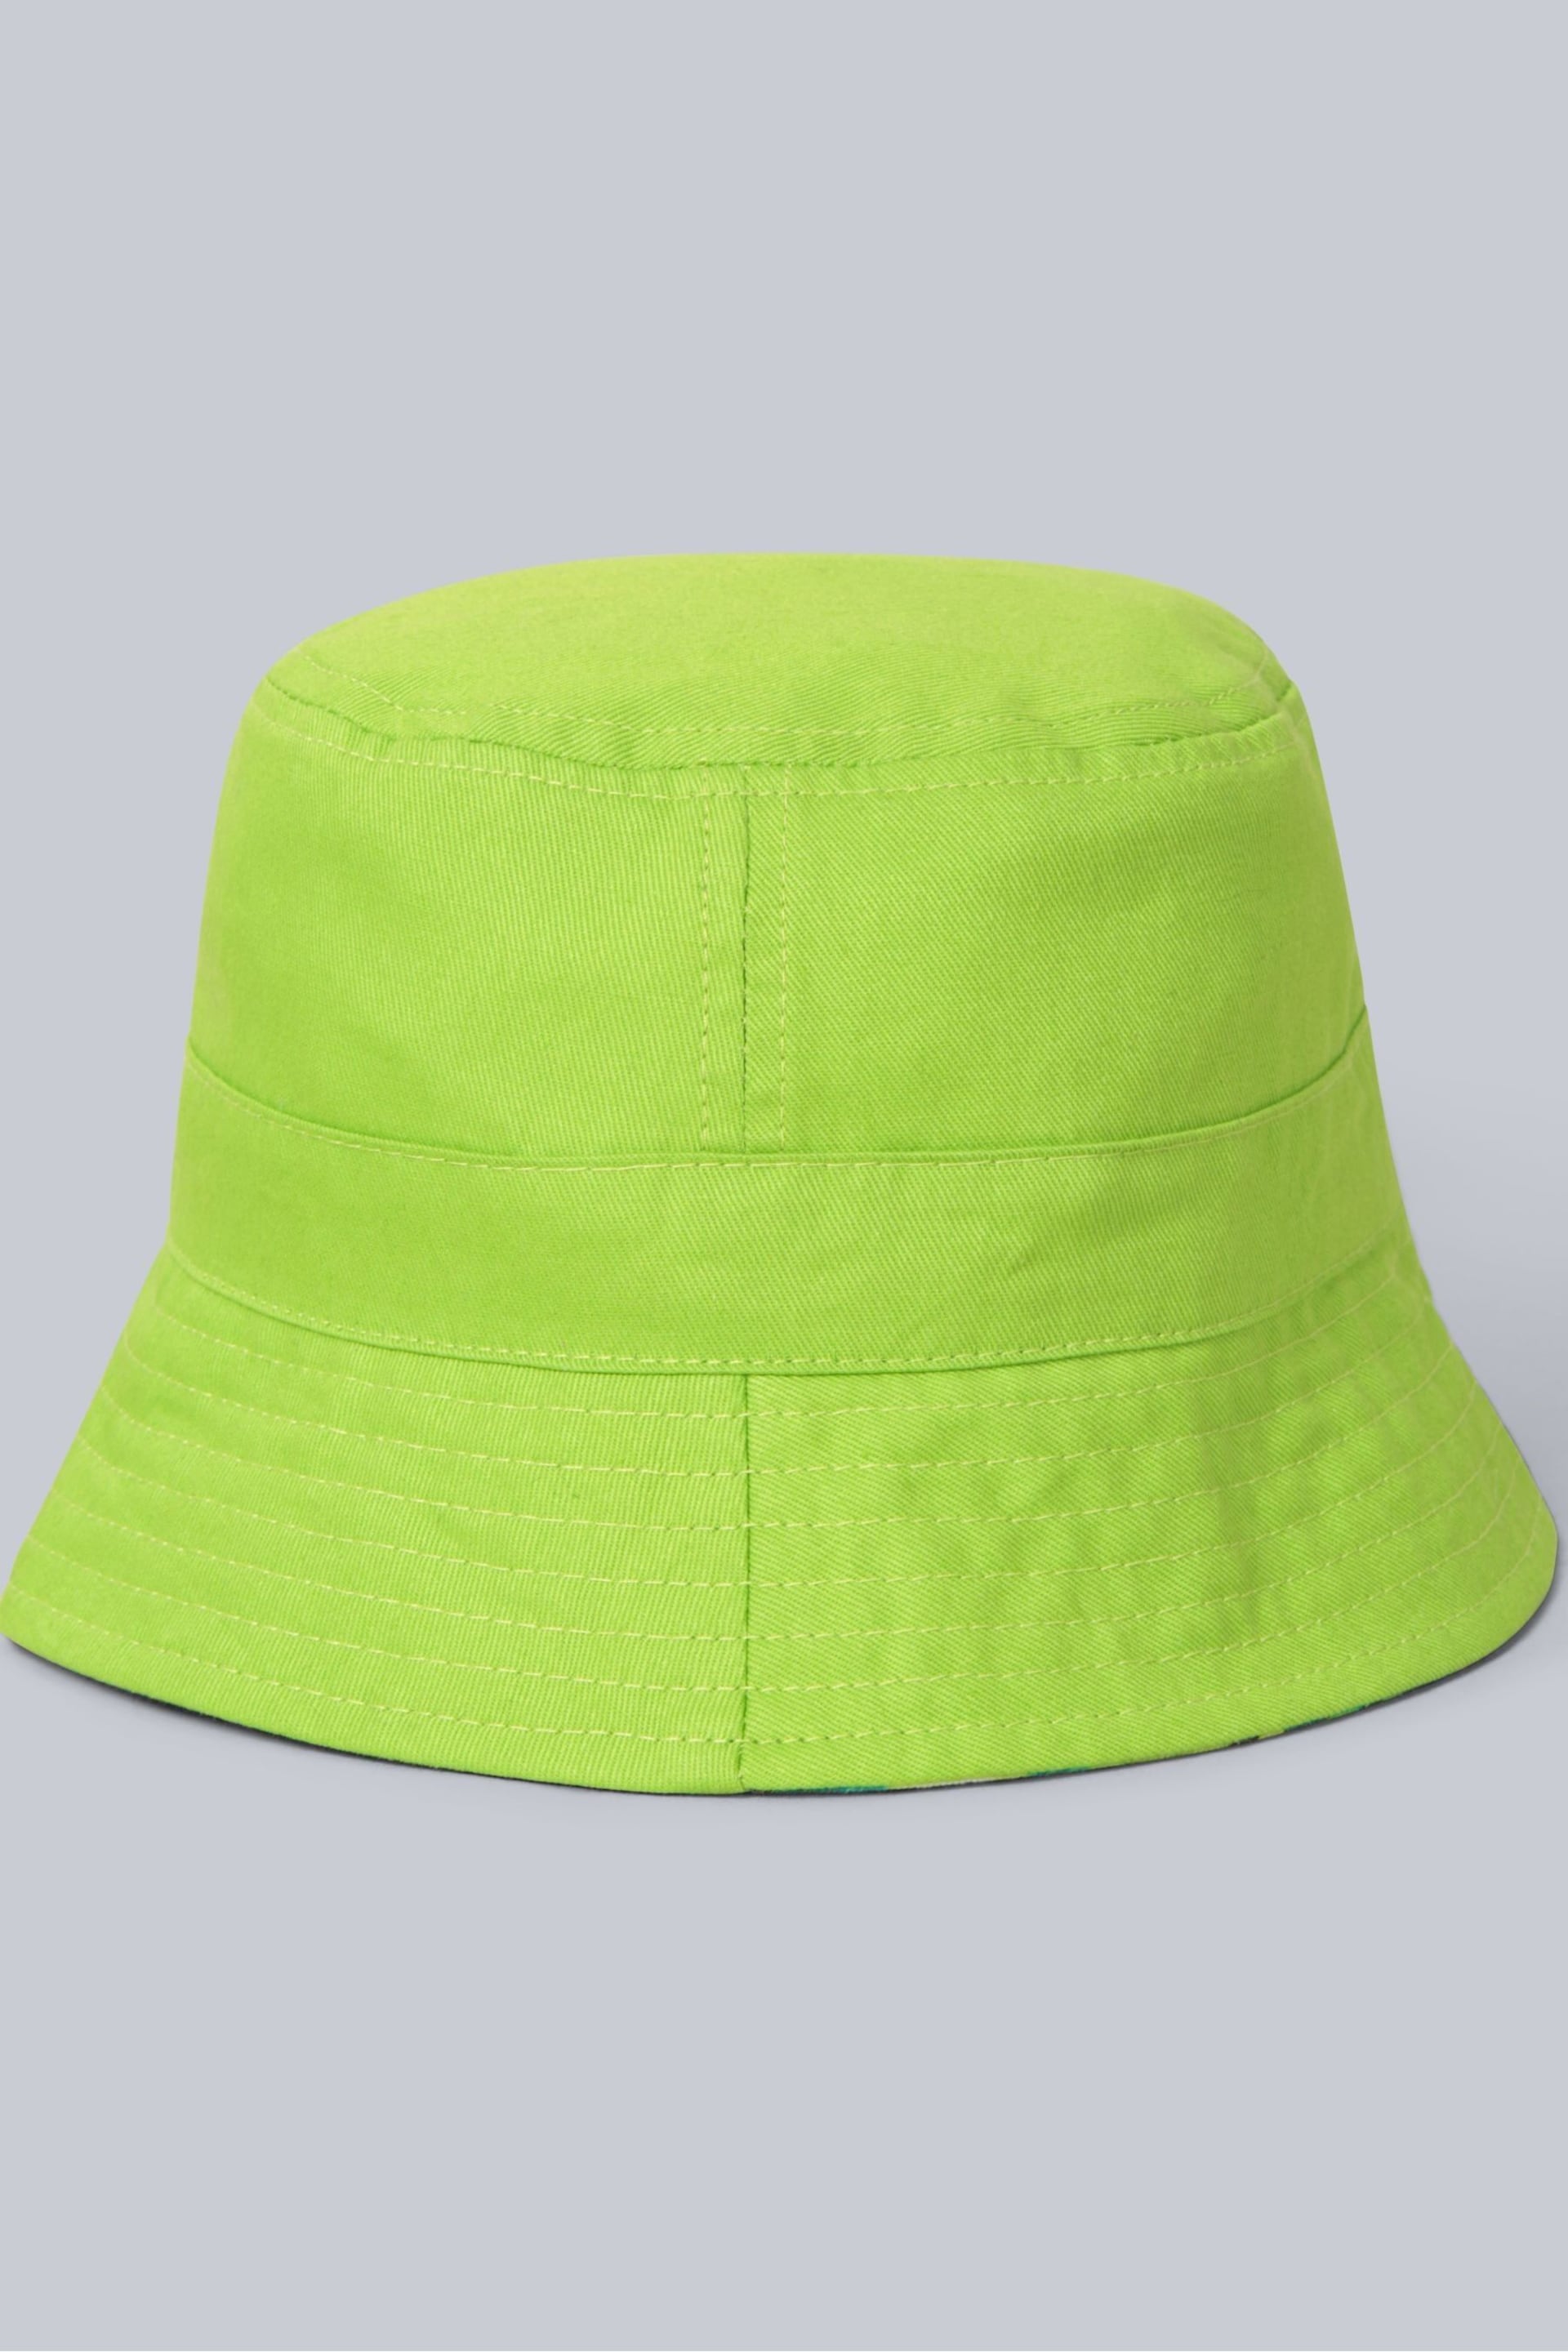 Animal Kids Bright Green Reversible Bucket Hat - Image 1 of 9